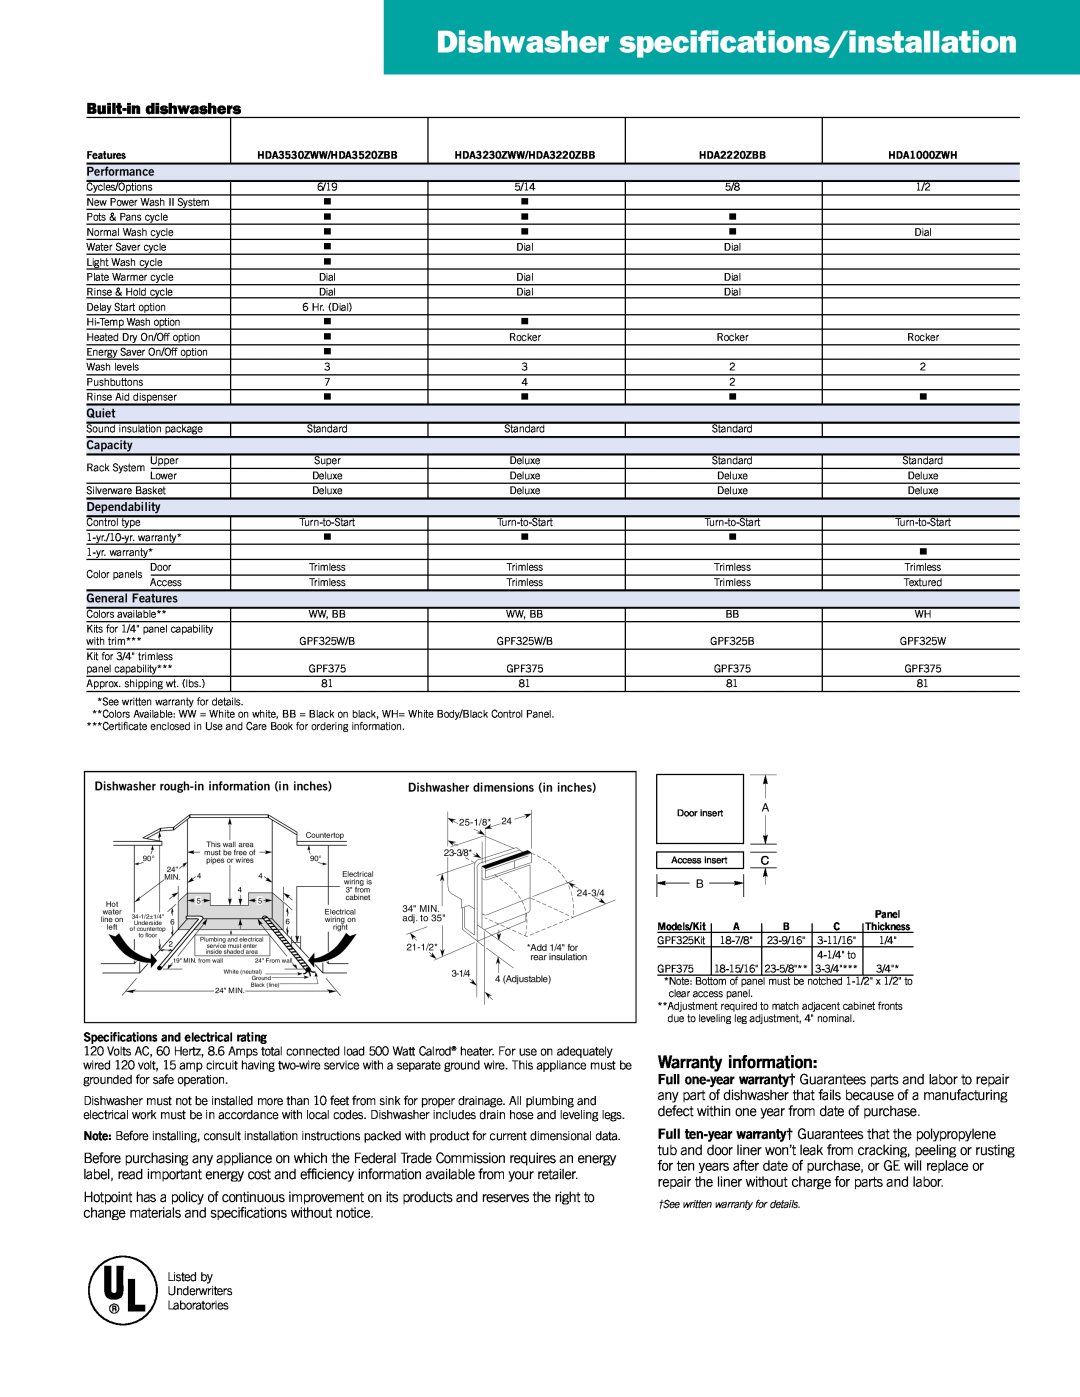 Hotpoint HDA3520ZBB Dishwasher specifications/installation, Warranty information, Built-indishwashers, Performance, Quiet 